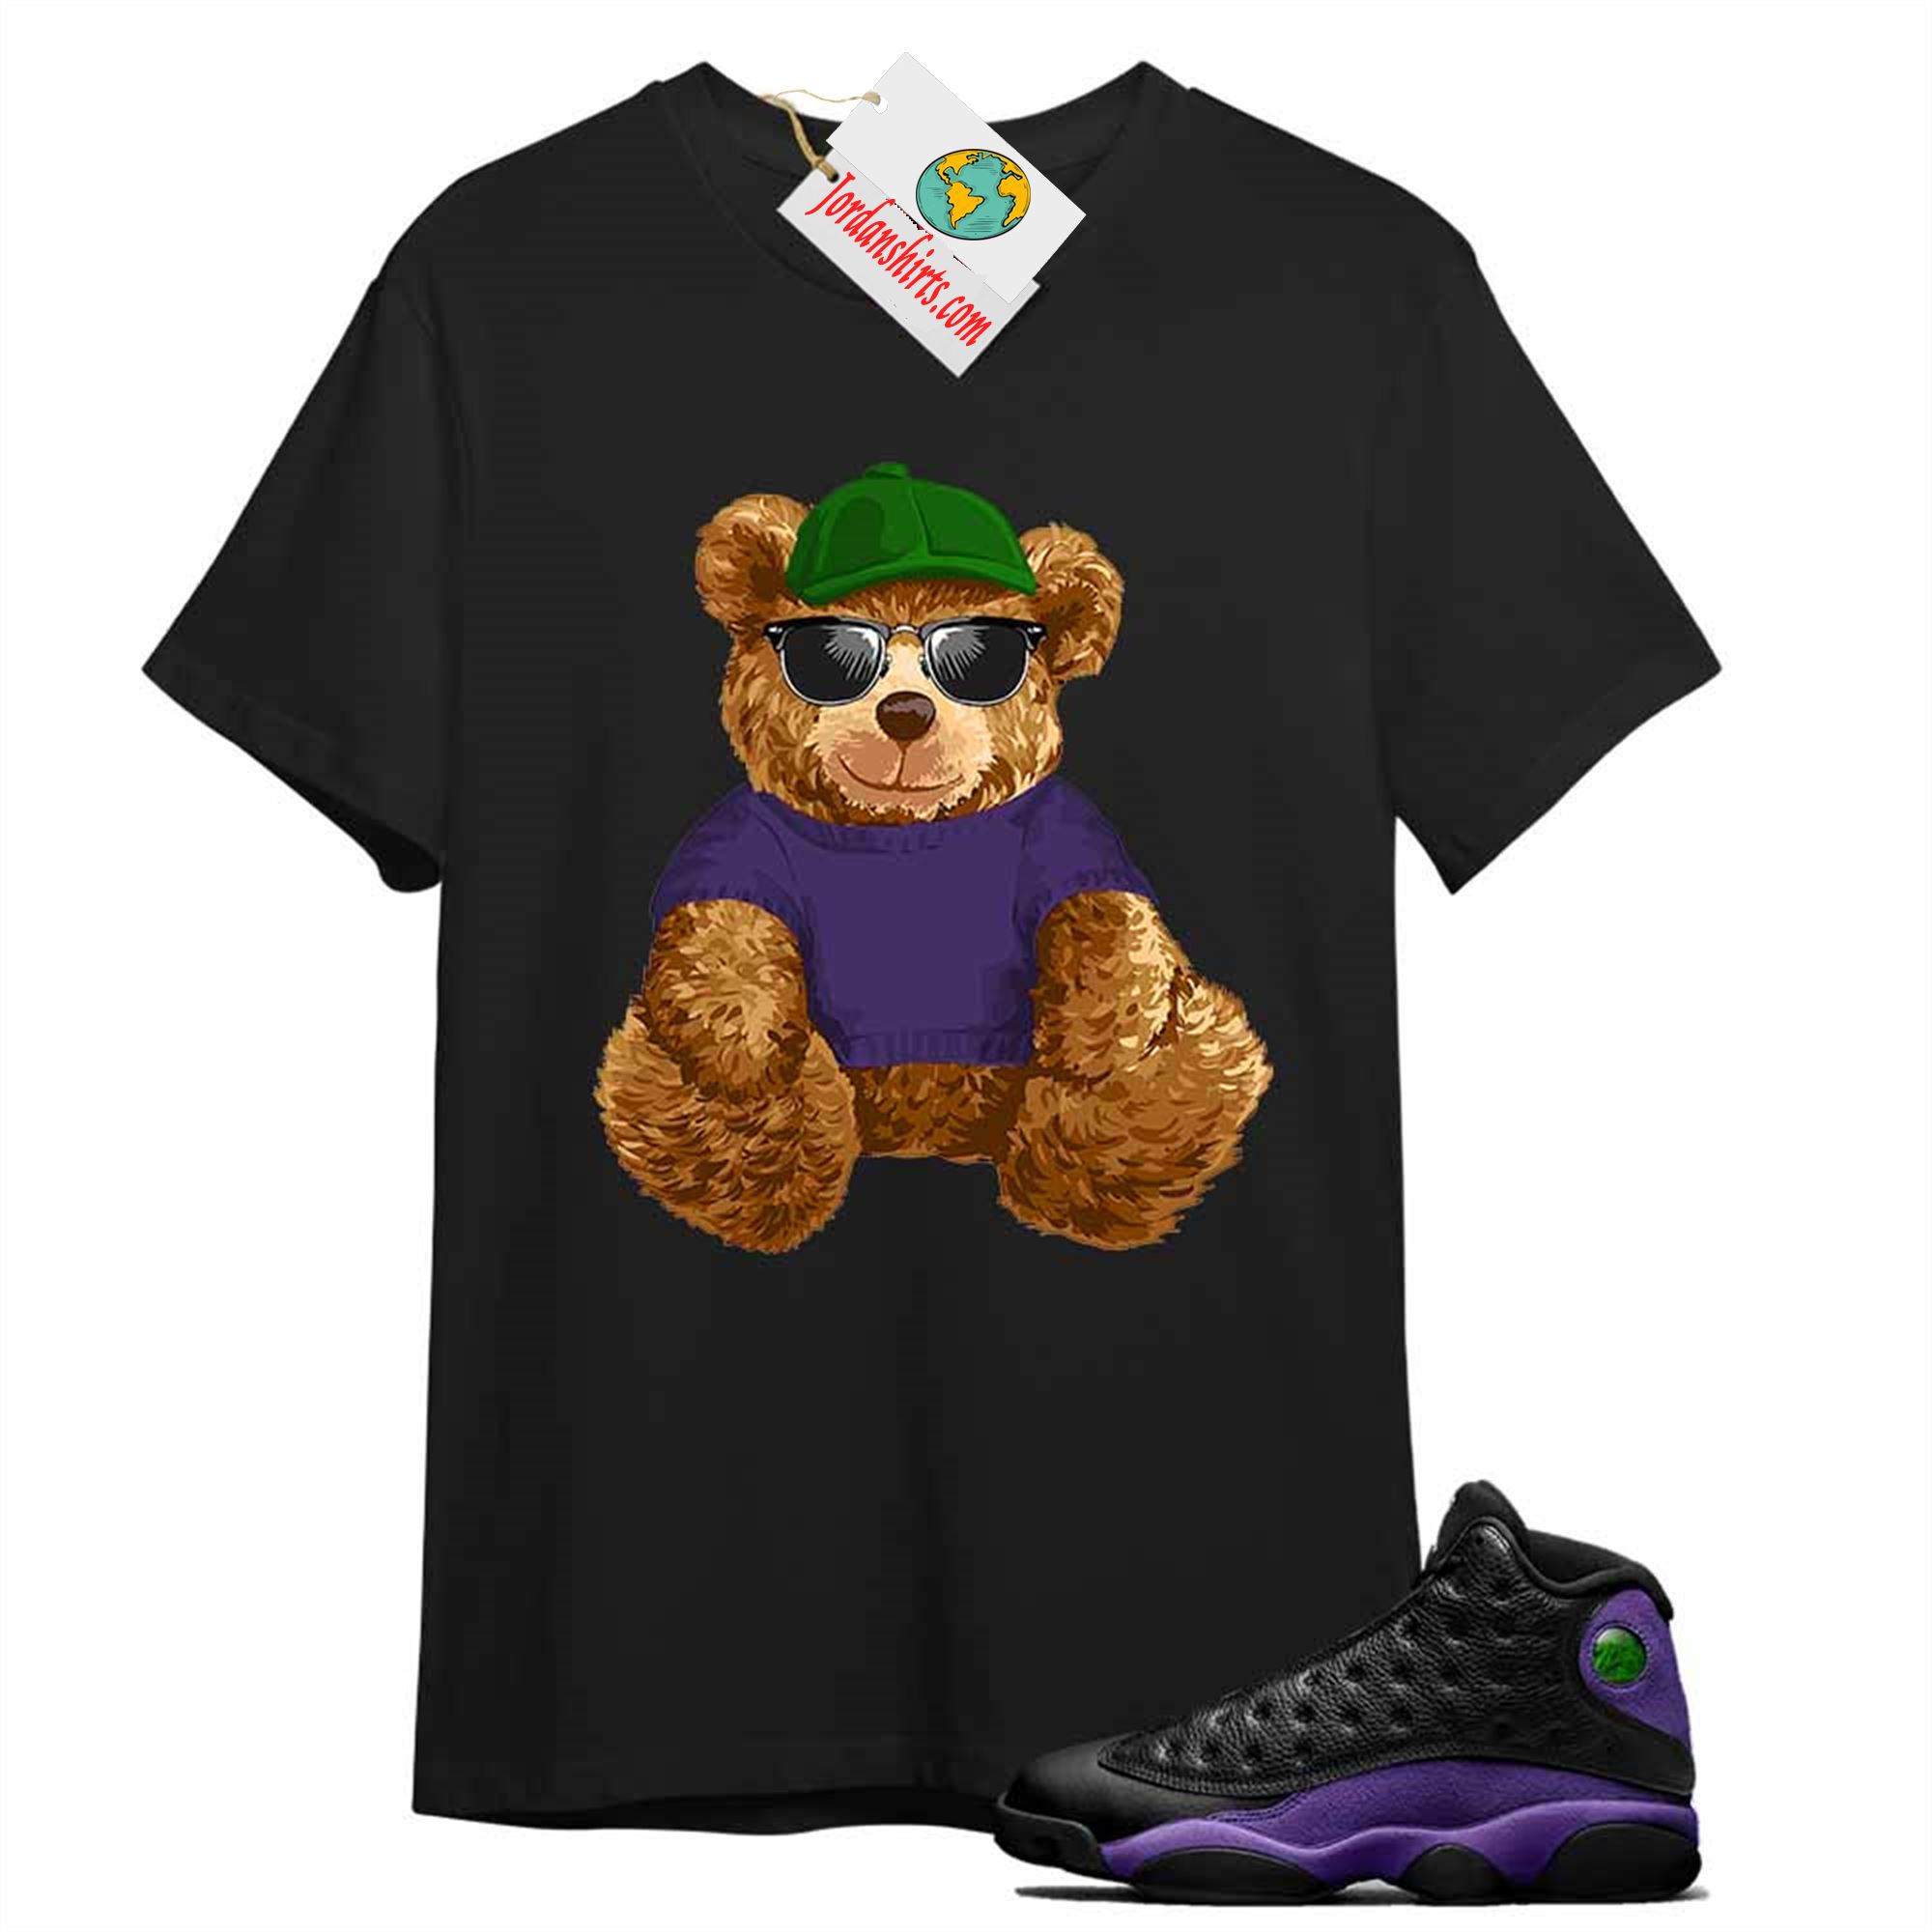 Jordan 13 Shirt, Teddy Bear With Sunglasses _ Hat Black T-shirt Air Jordan 13 Court Purple 13s Size Up To 5xl